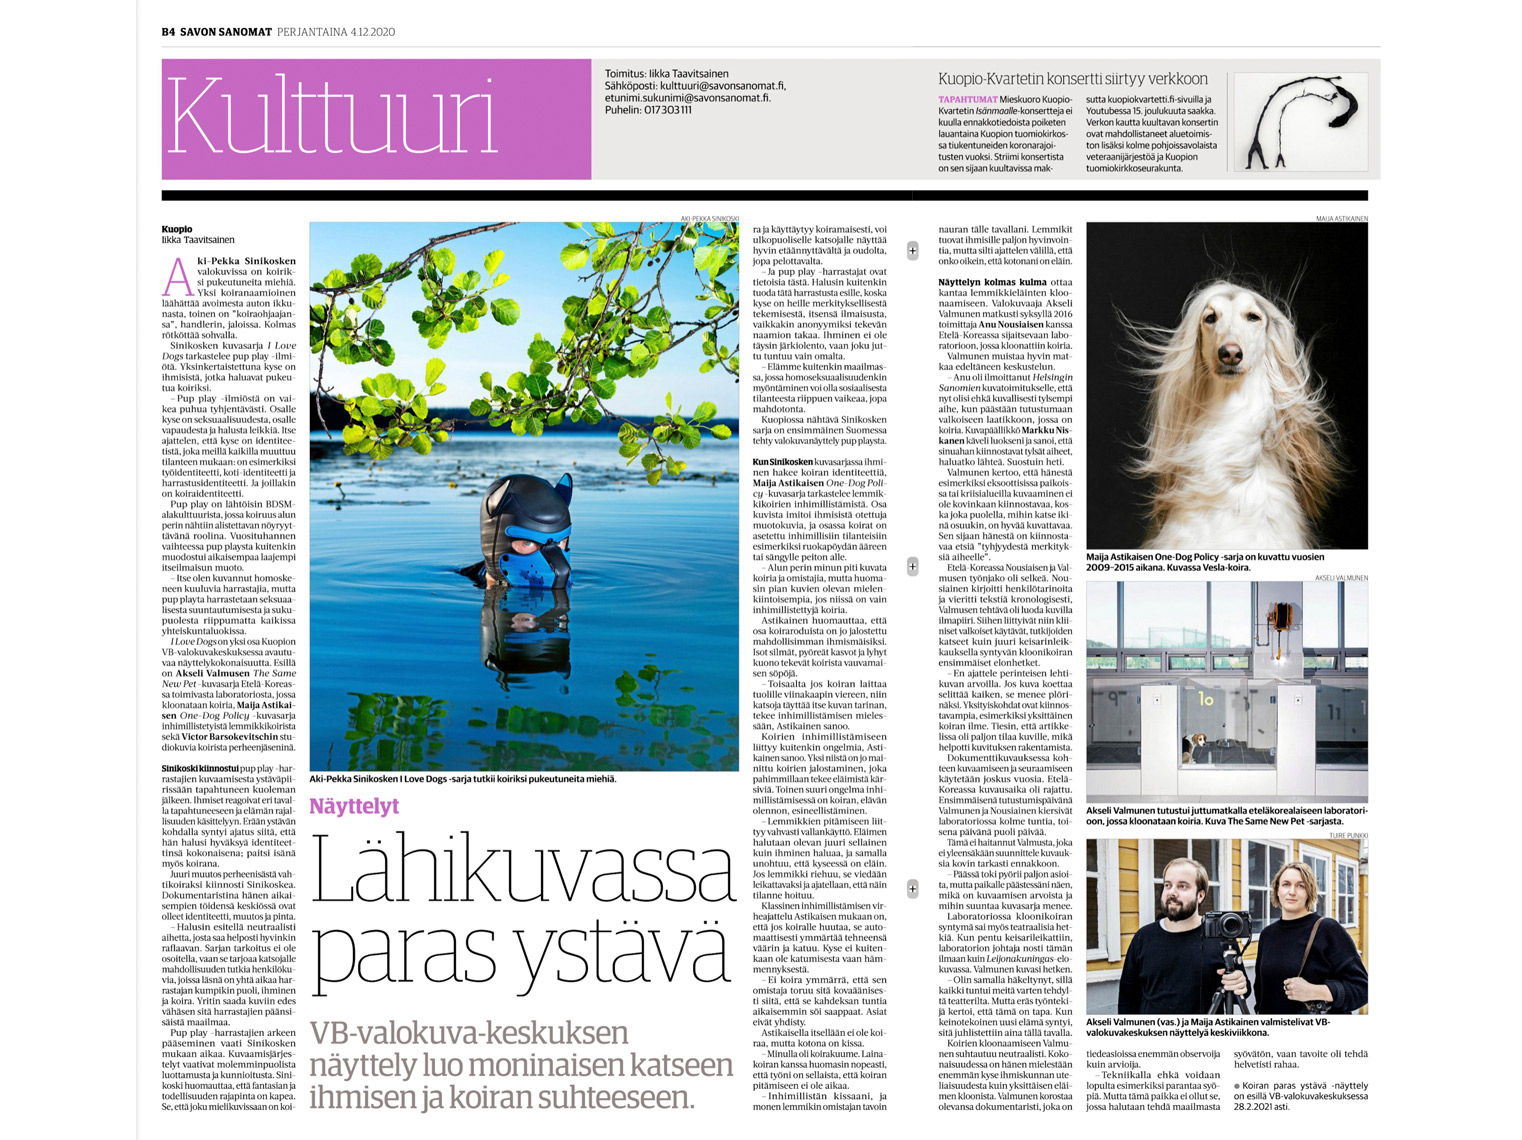 I Love Dogs  // Documentary Photo // Aki-Pekka Sinikoski, Photographer from Helsinki, Finland